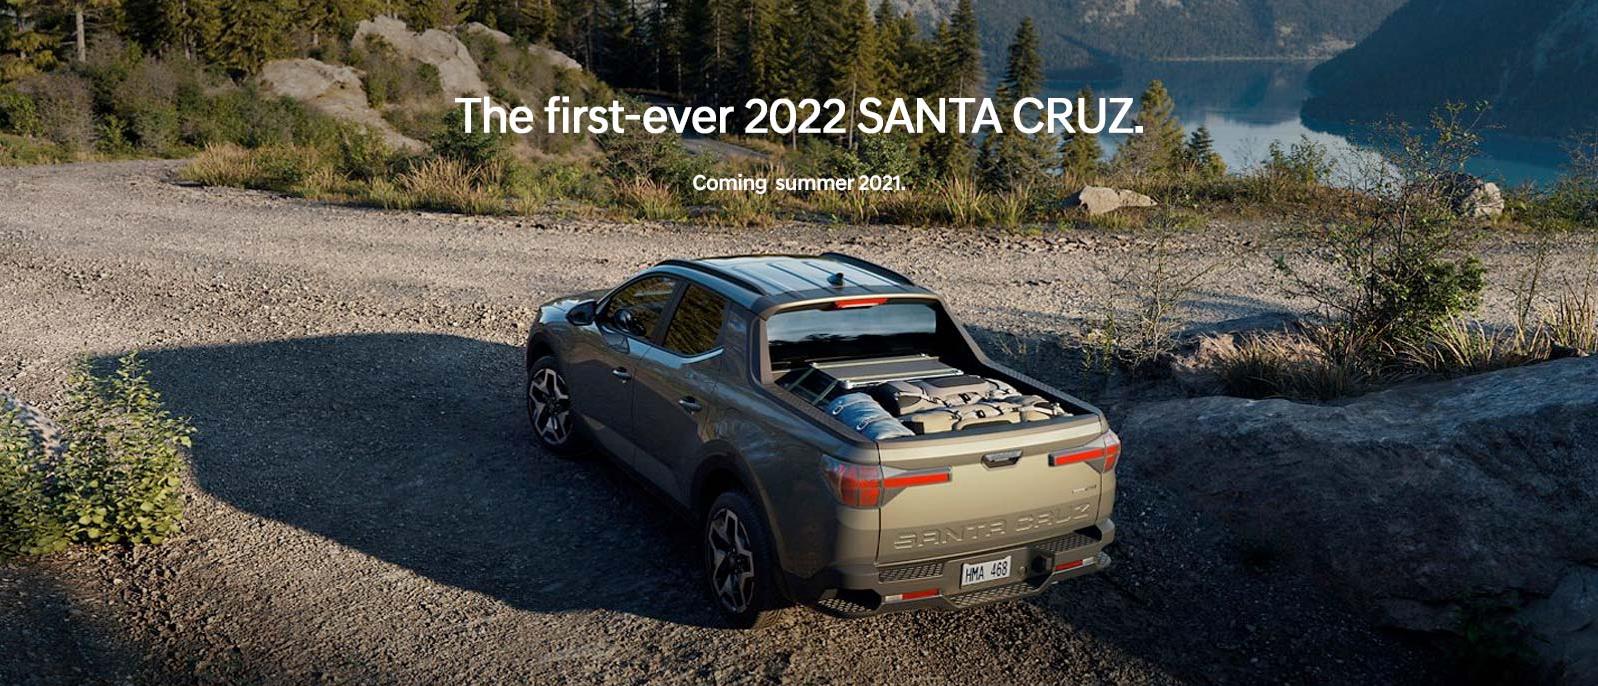 2022 Santa Cruz rear view on mountain road